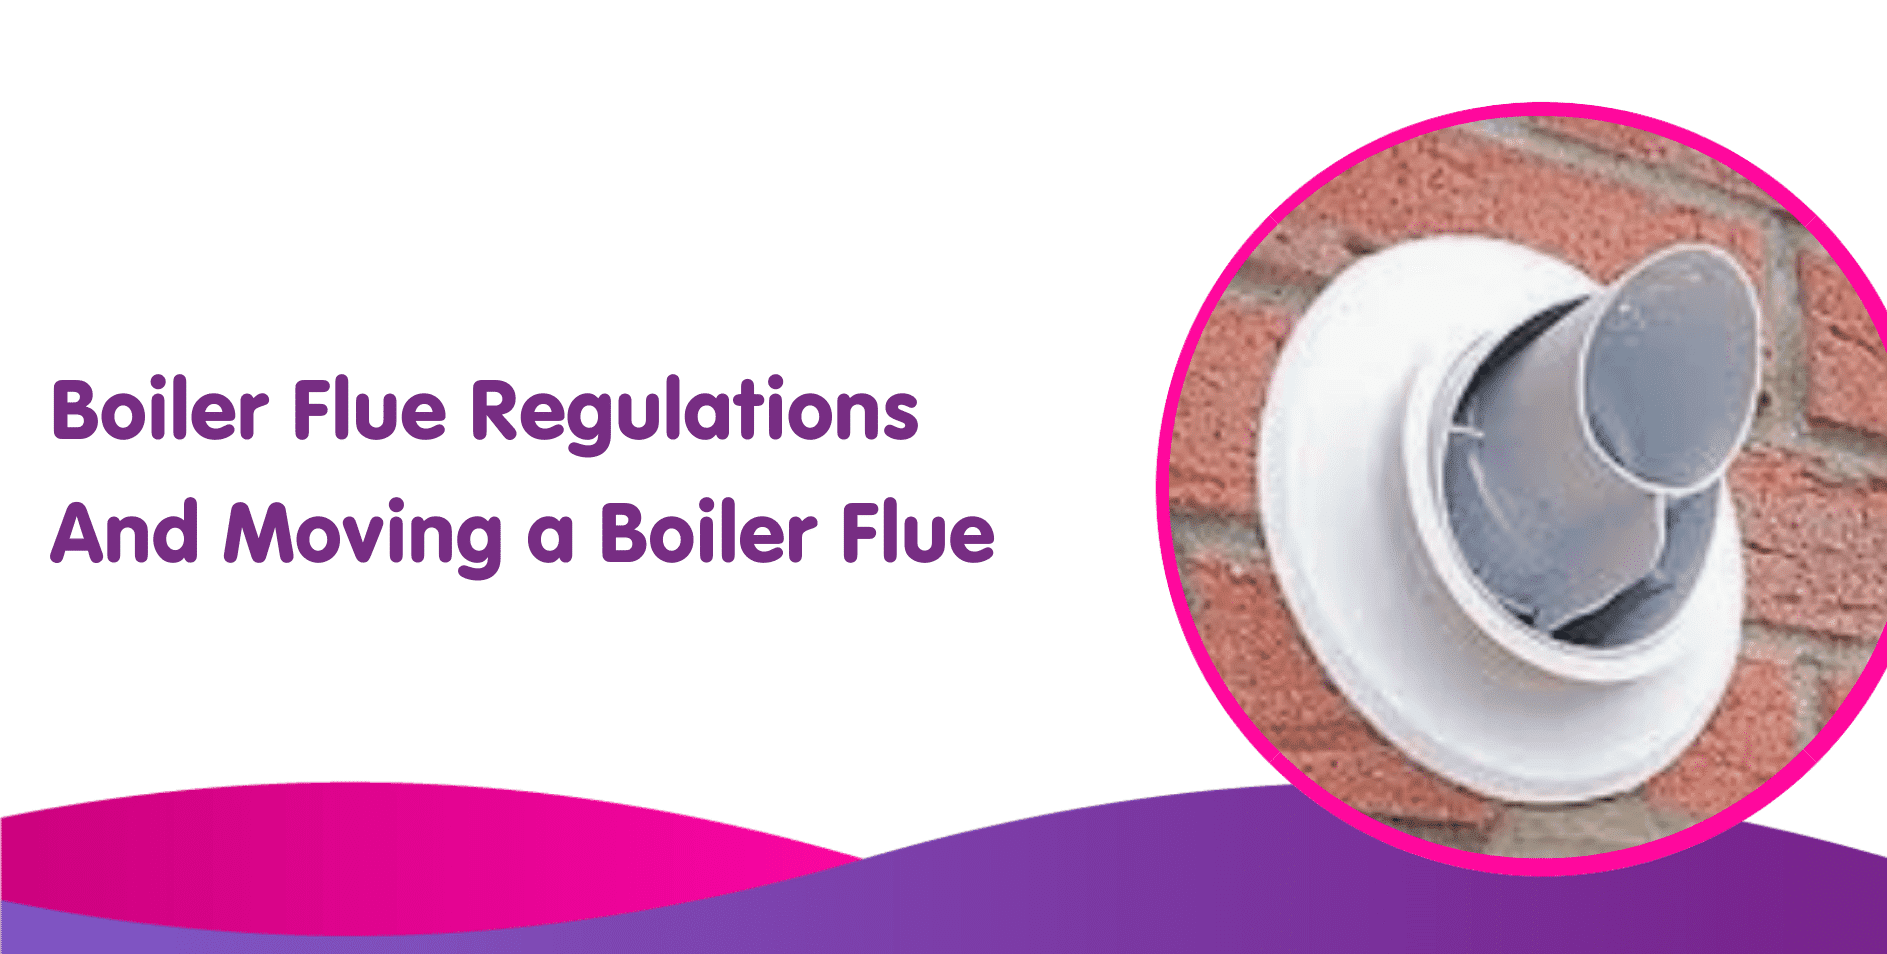 Boiler Flue Regulations And Moving a Boiler Flue